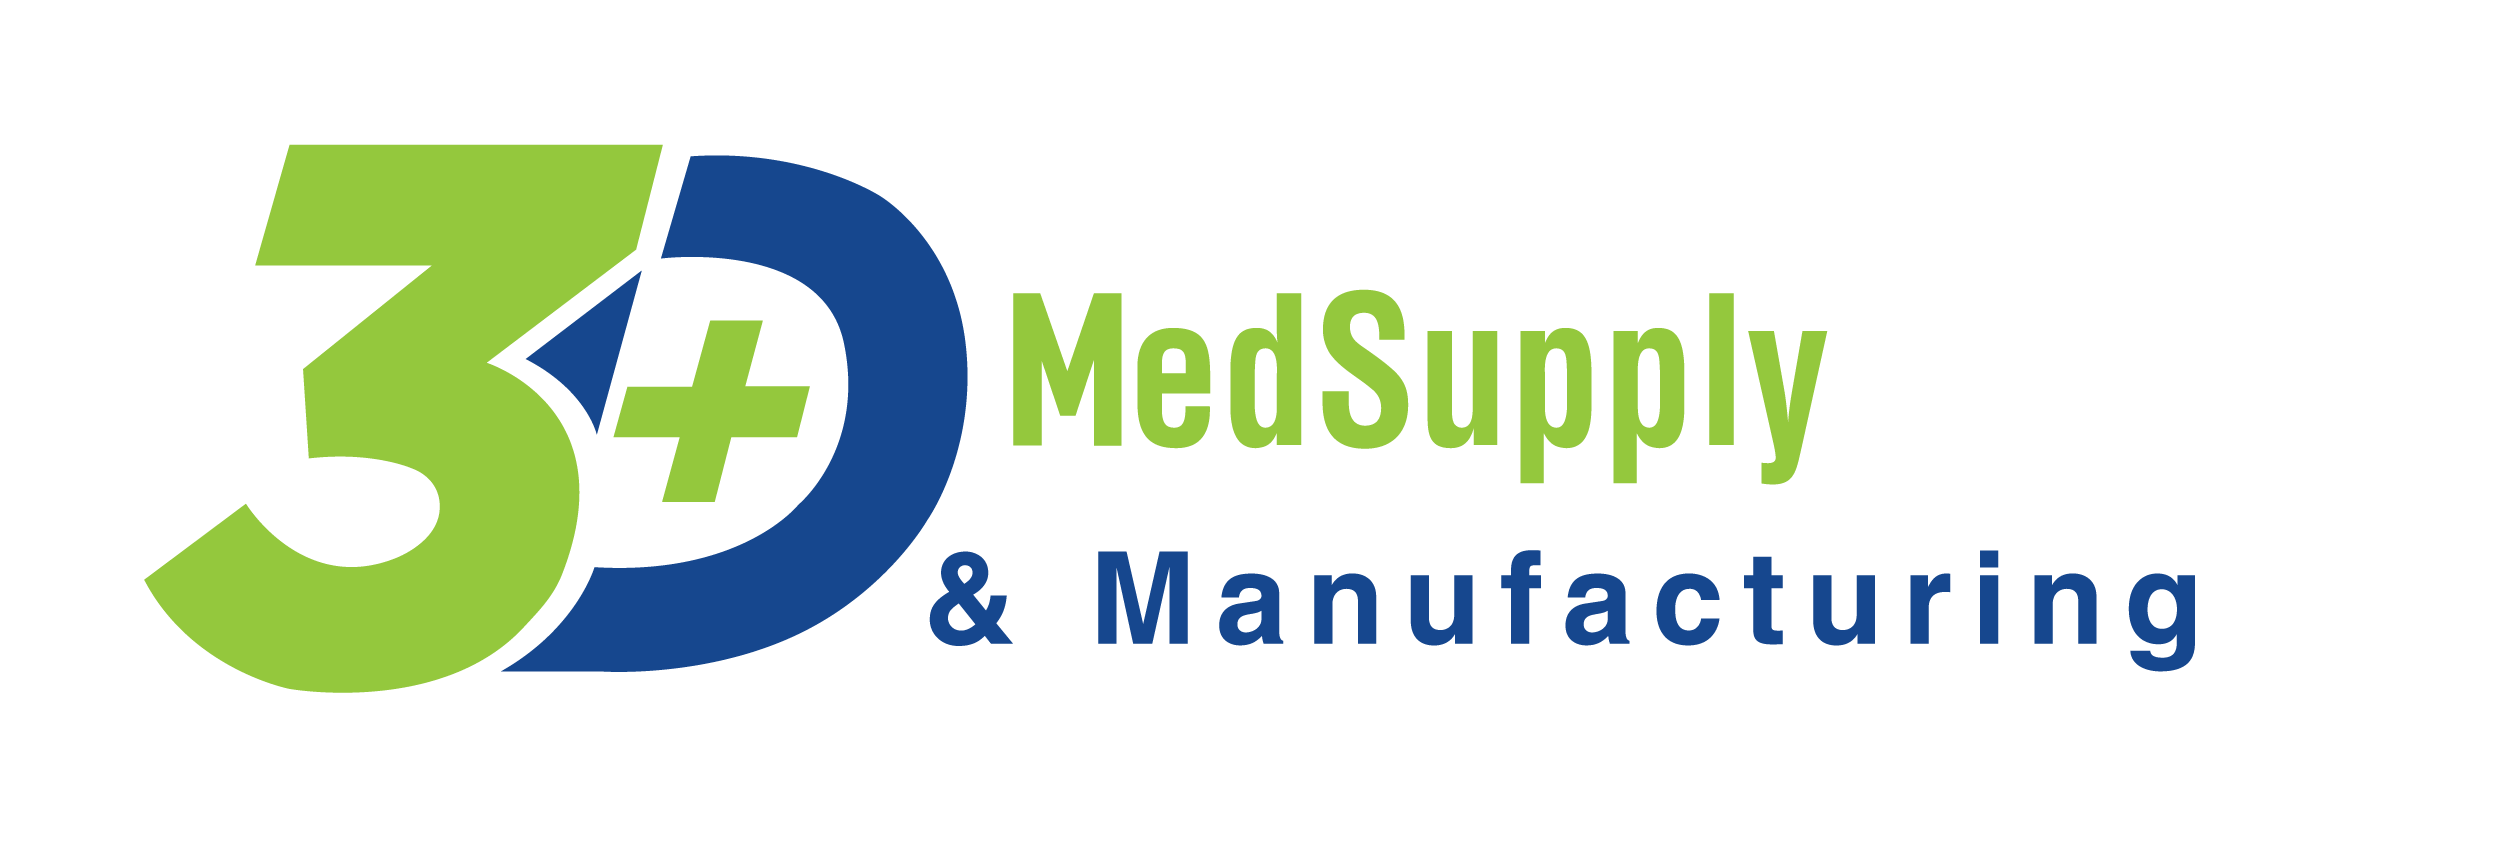 3D Medical Supply